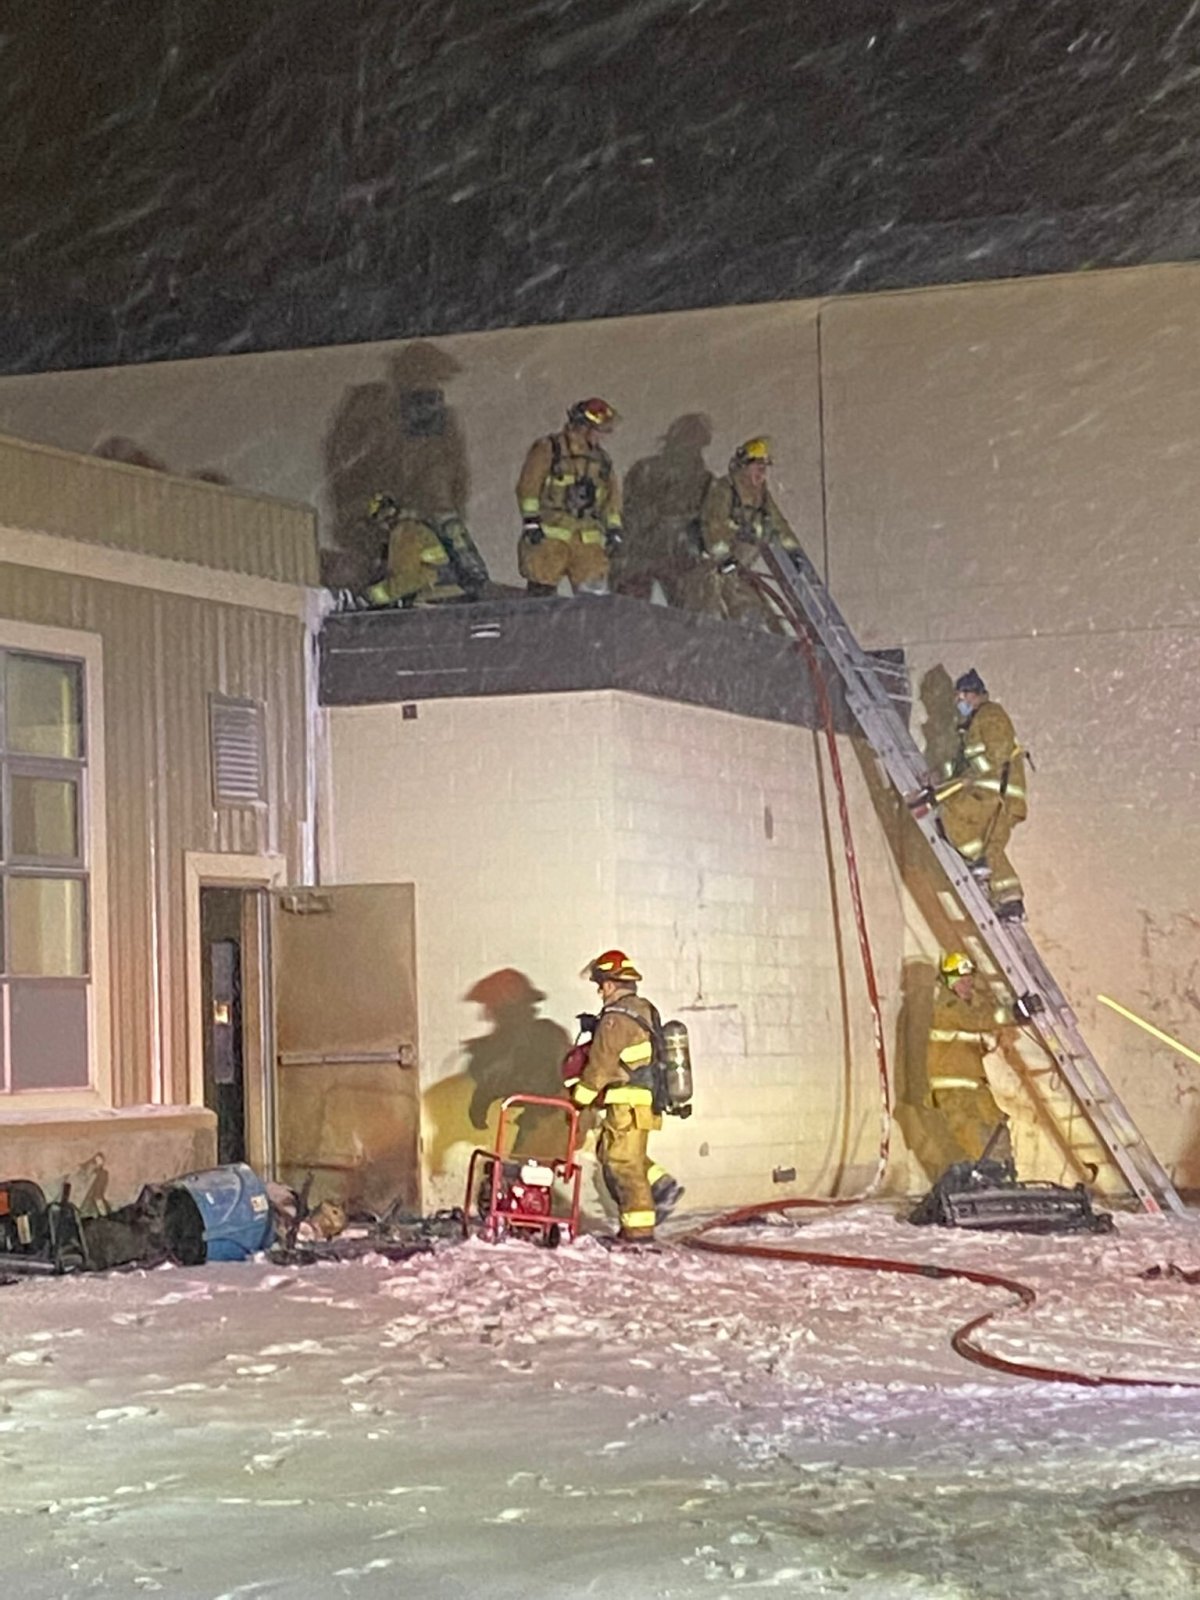 Regina Fire Crews responded to a fire at McVeety School Wednesday night.